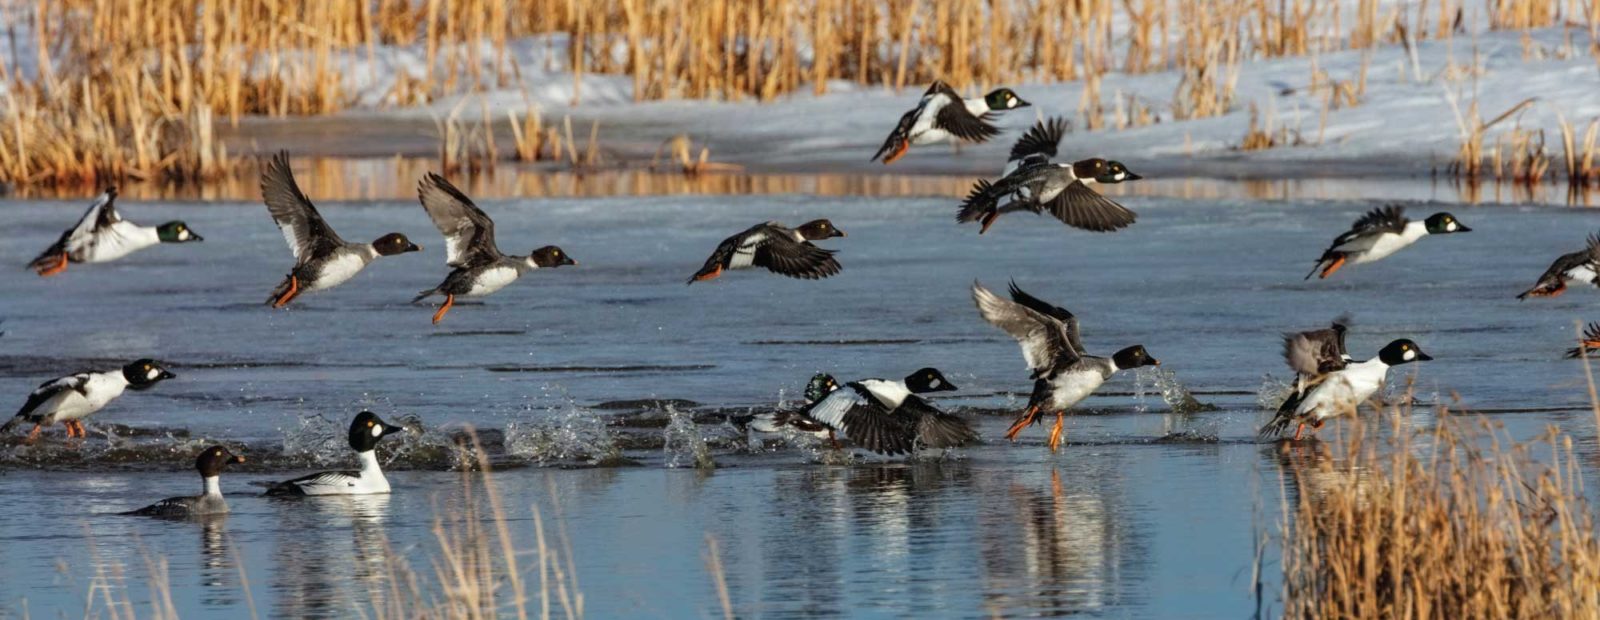 Goldeneye ducks take off from pond